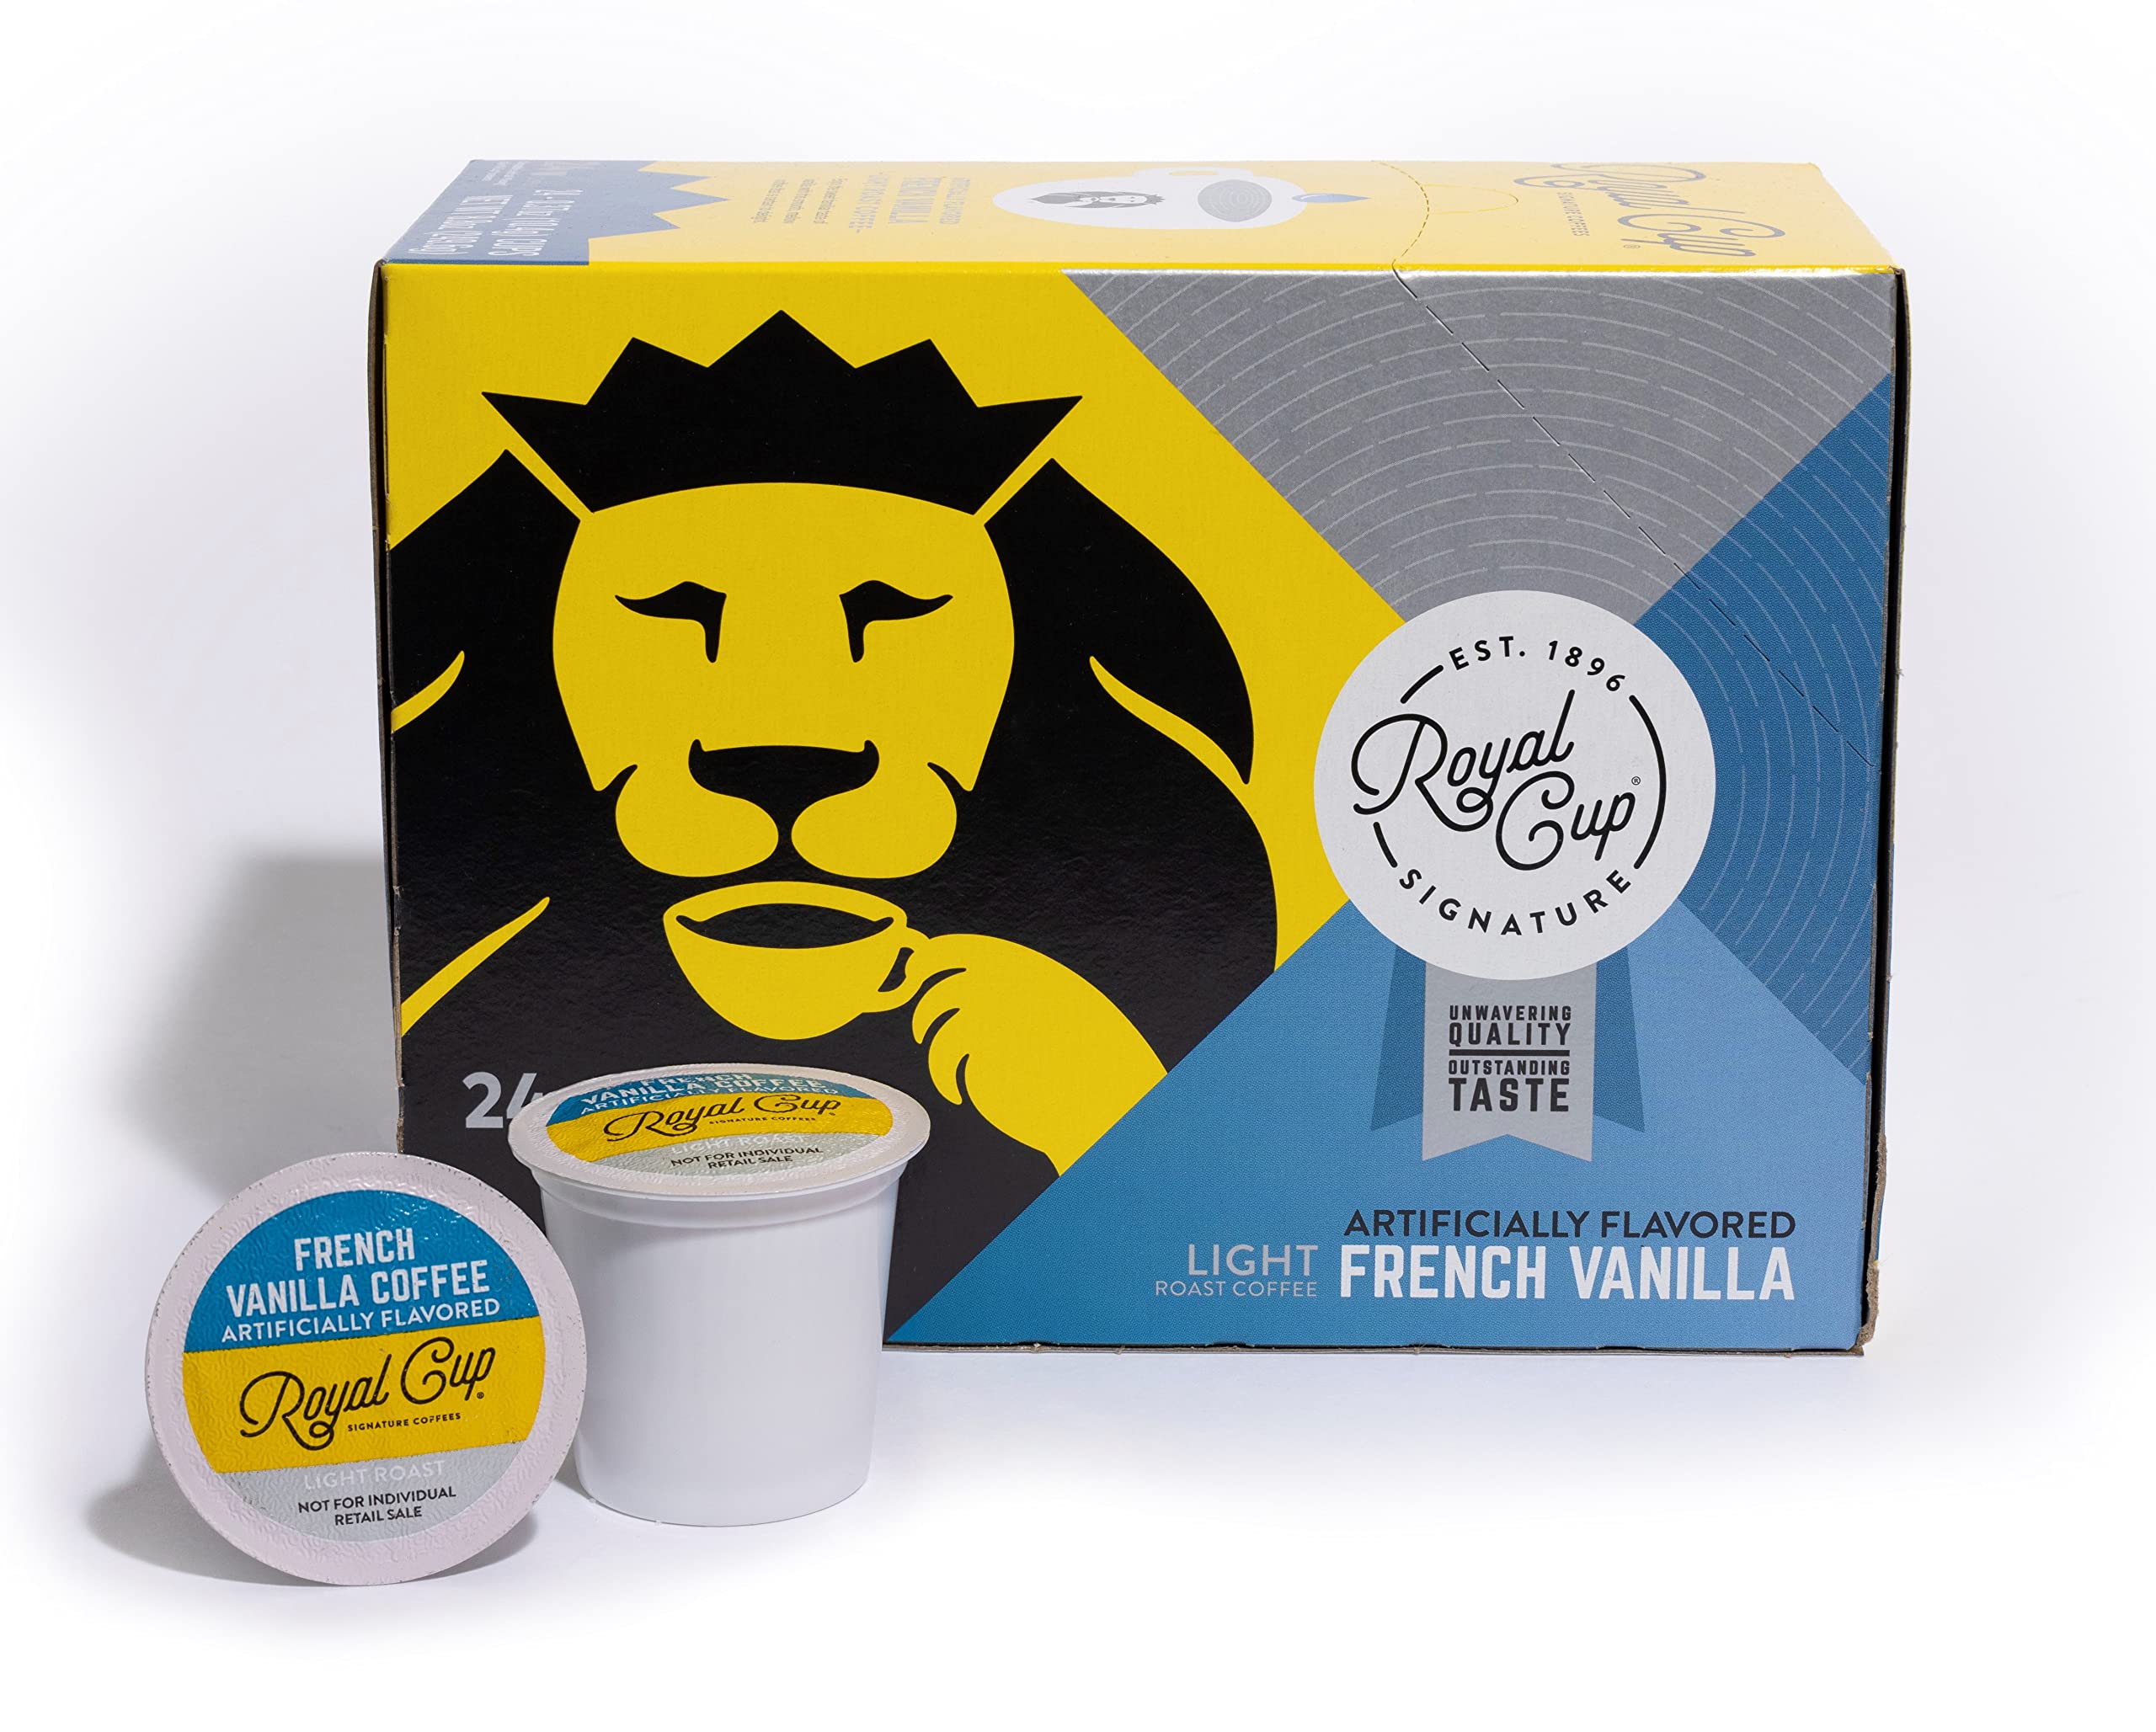 French Vanilla Coffee Creamer Singles 24 pack